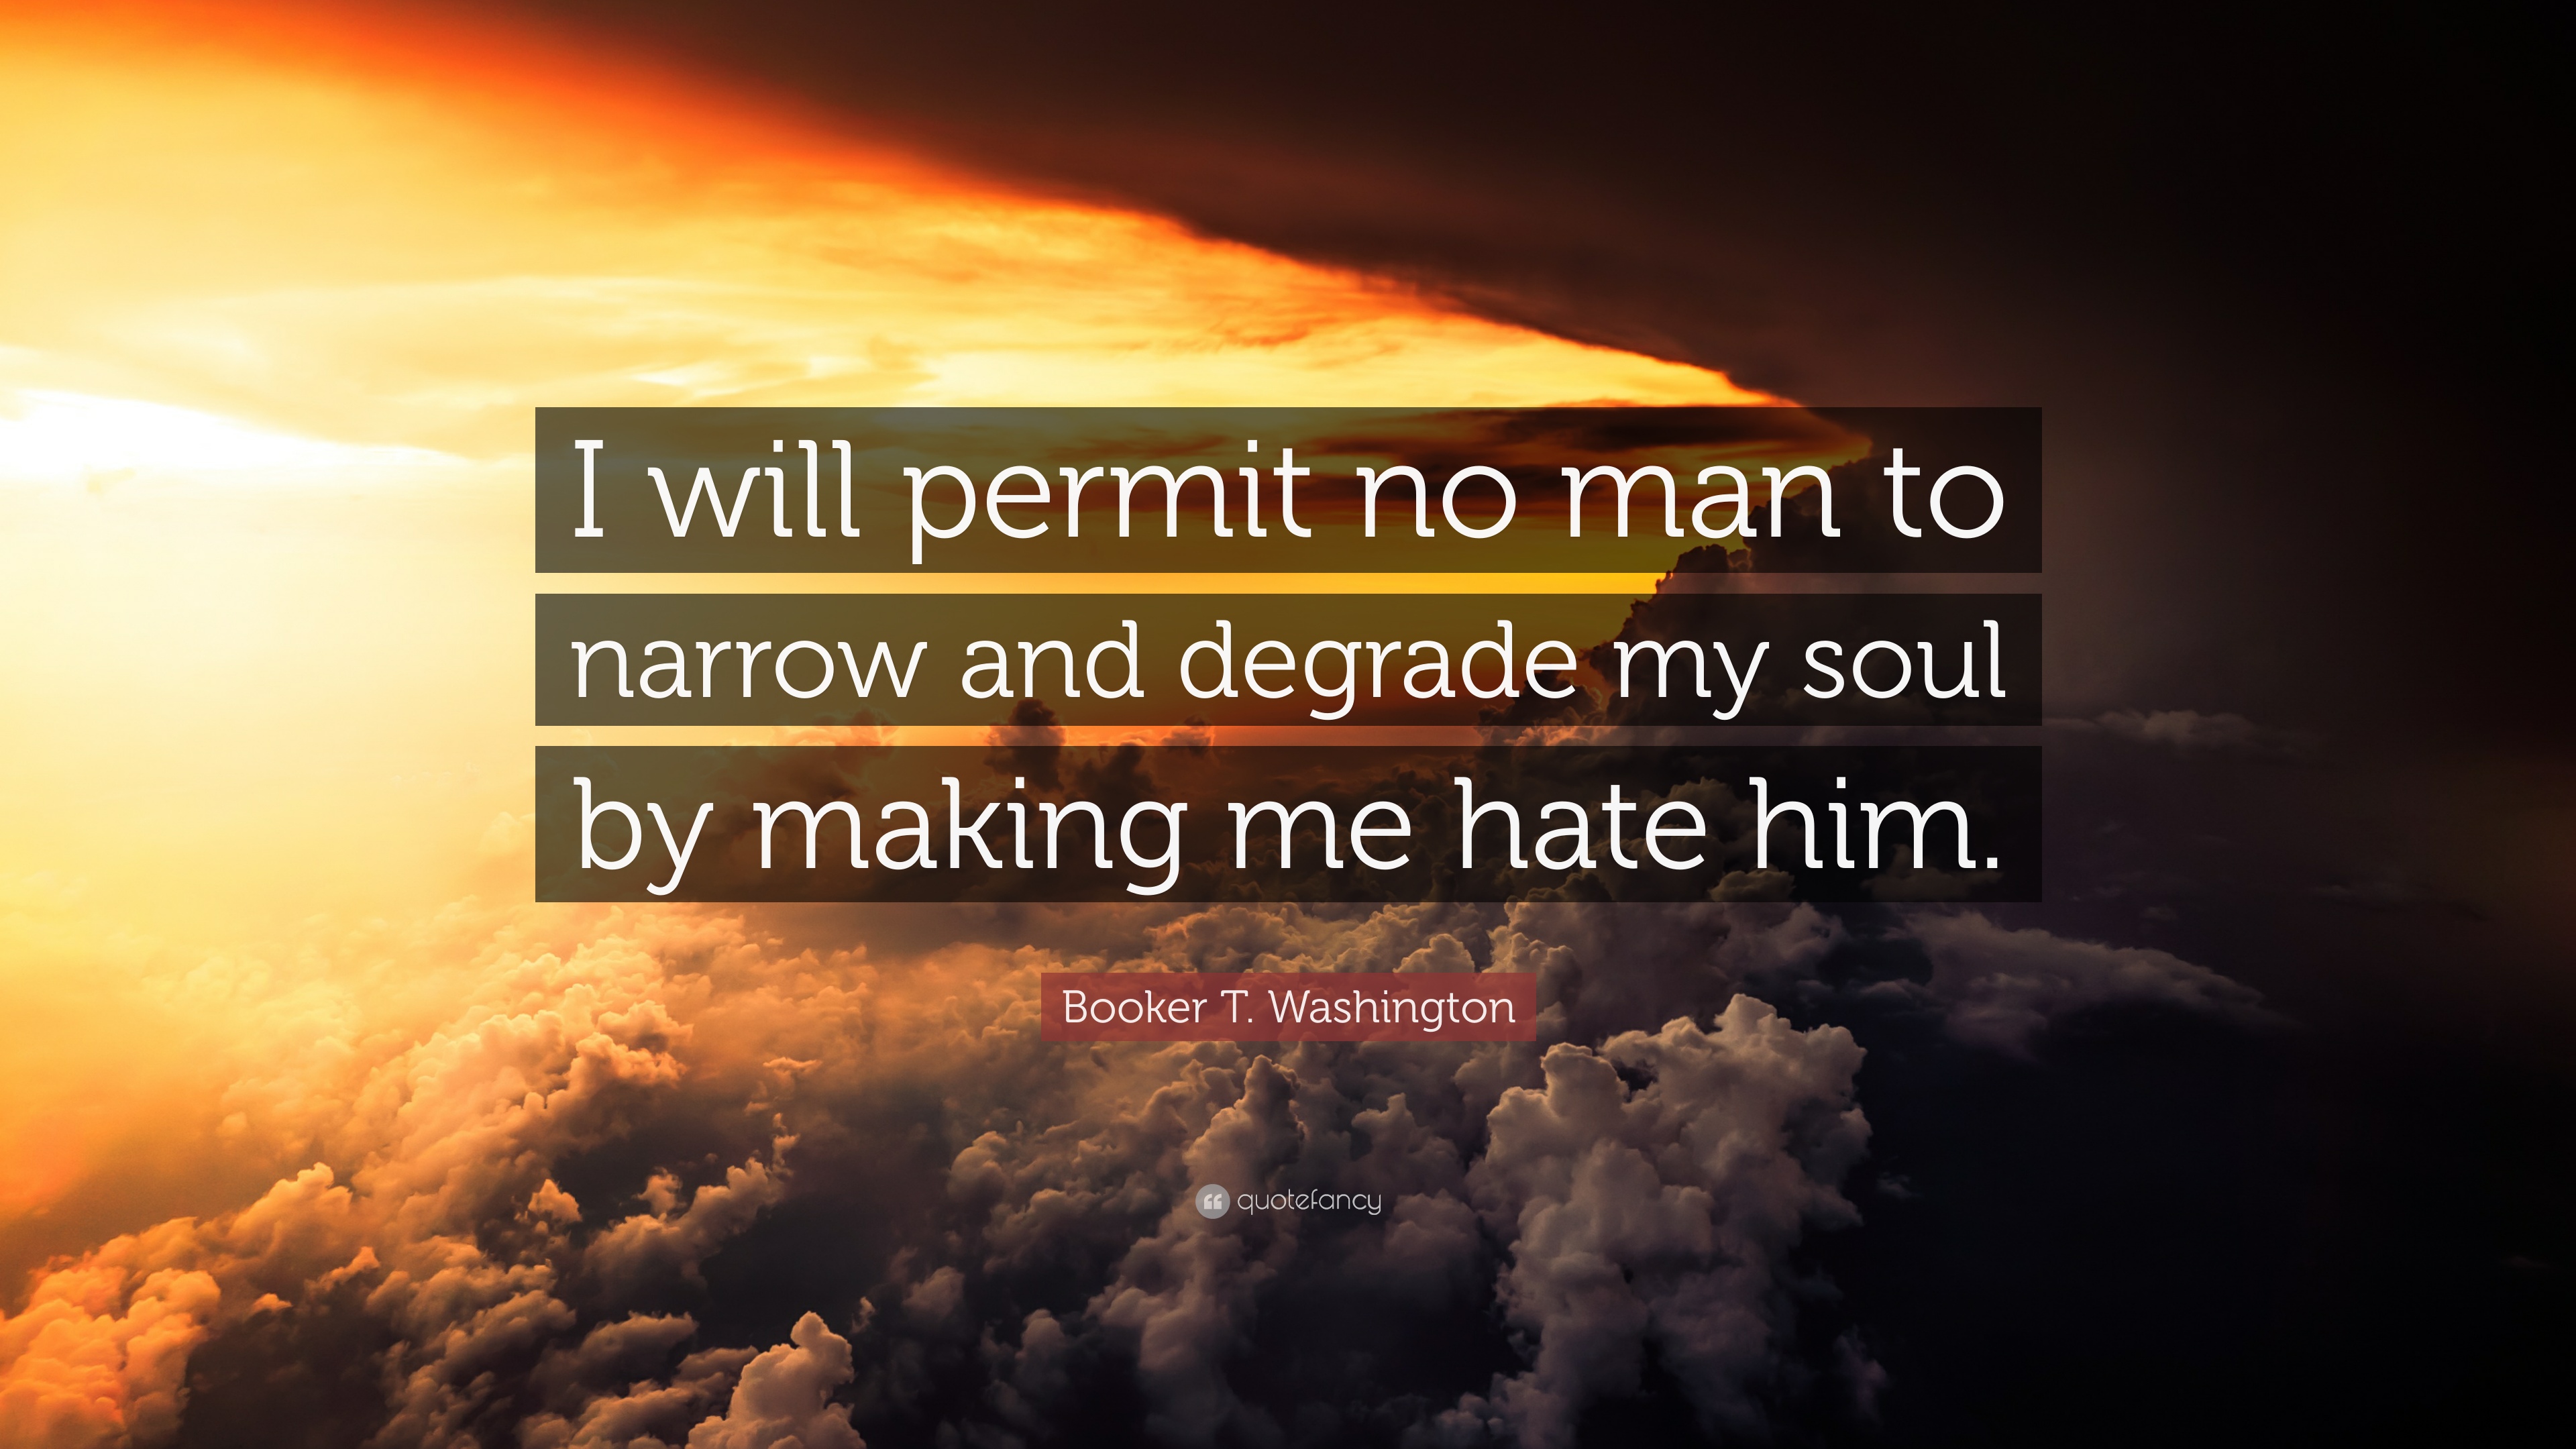 Booker T. Washington Quote: “I will permit no man to narrow